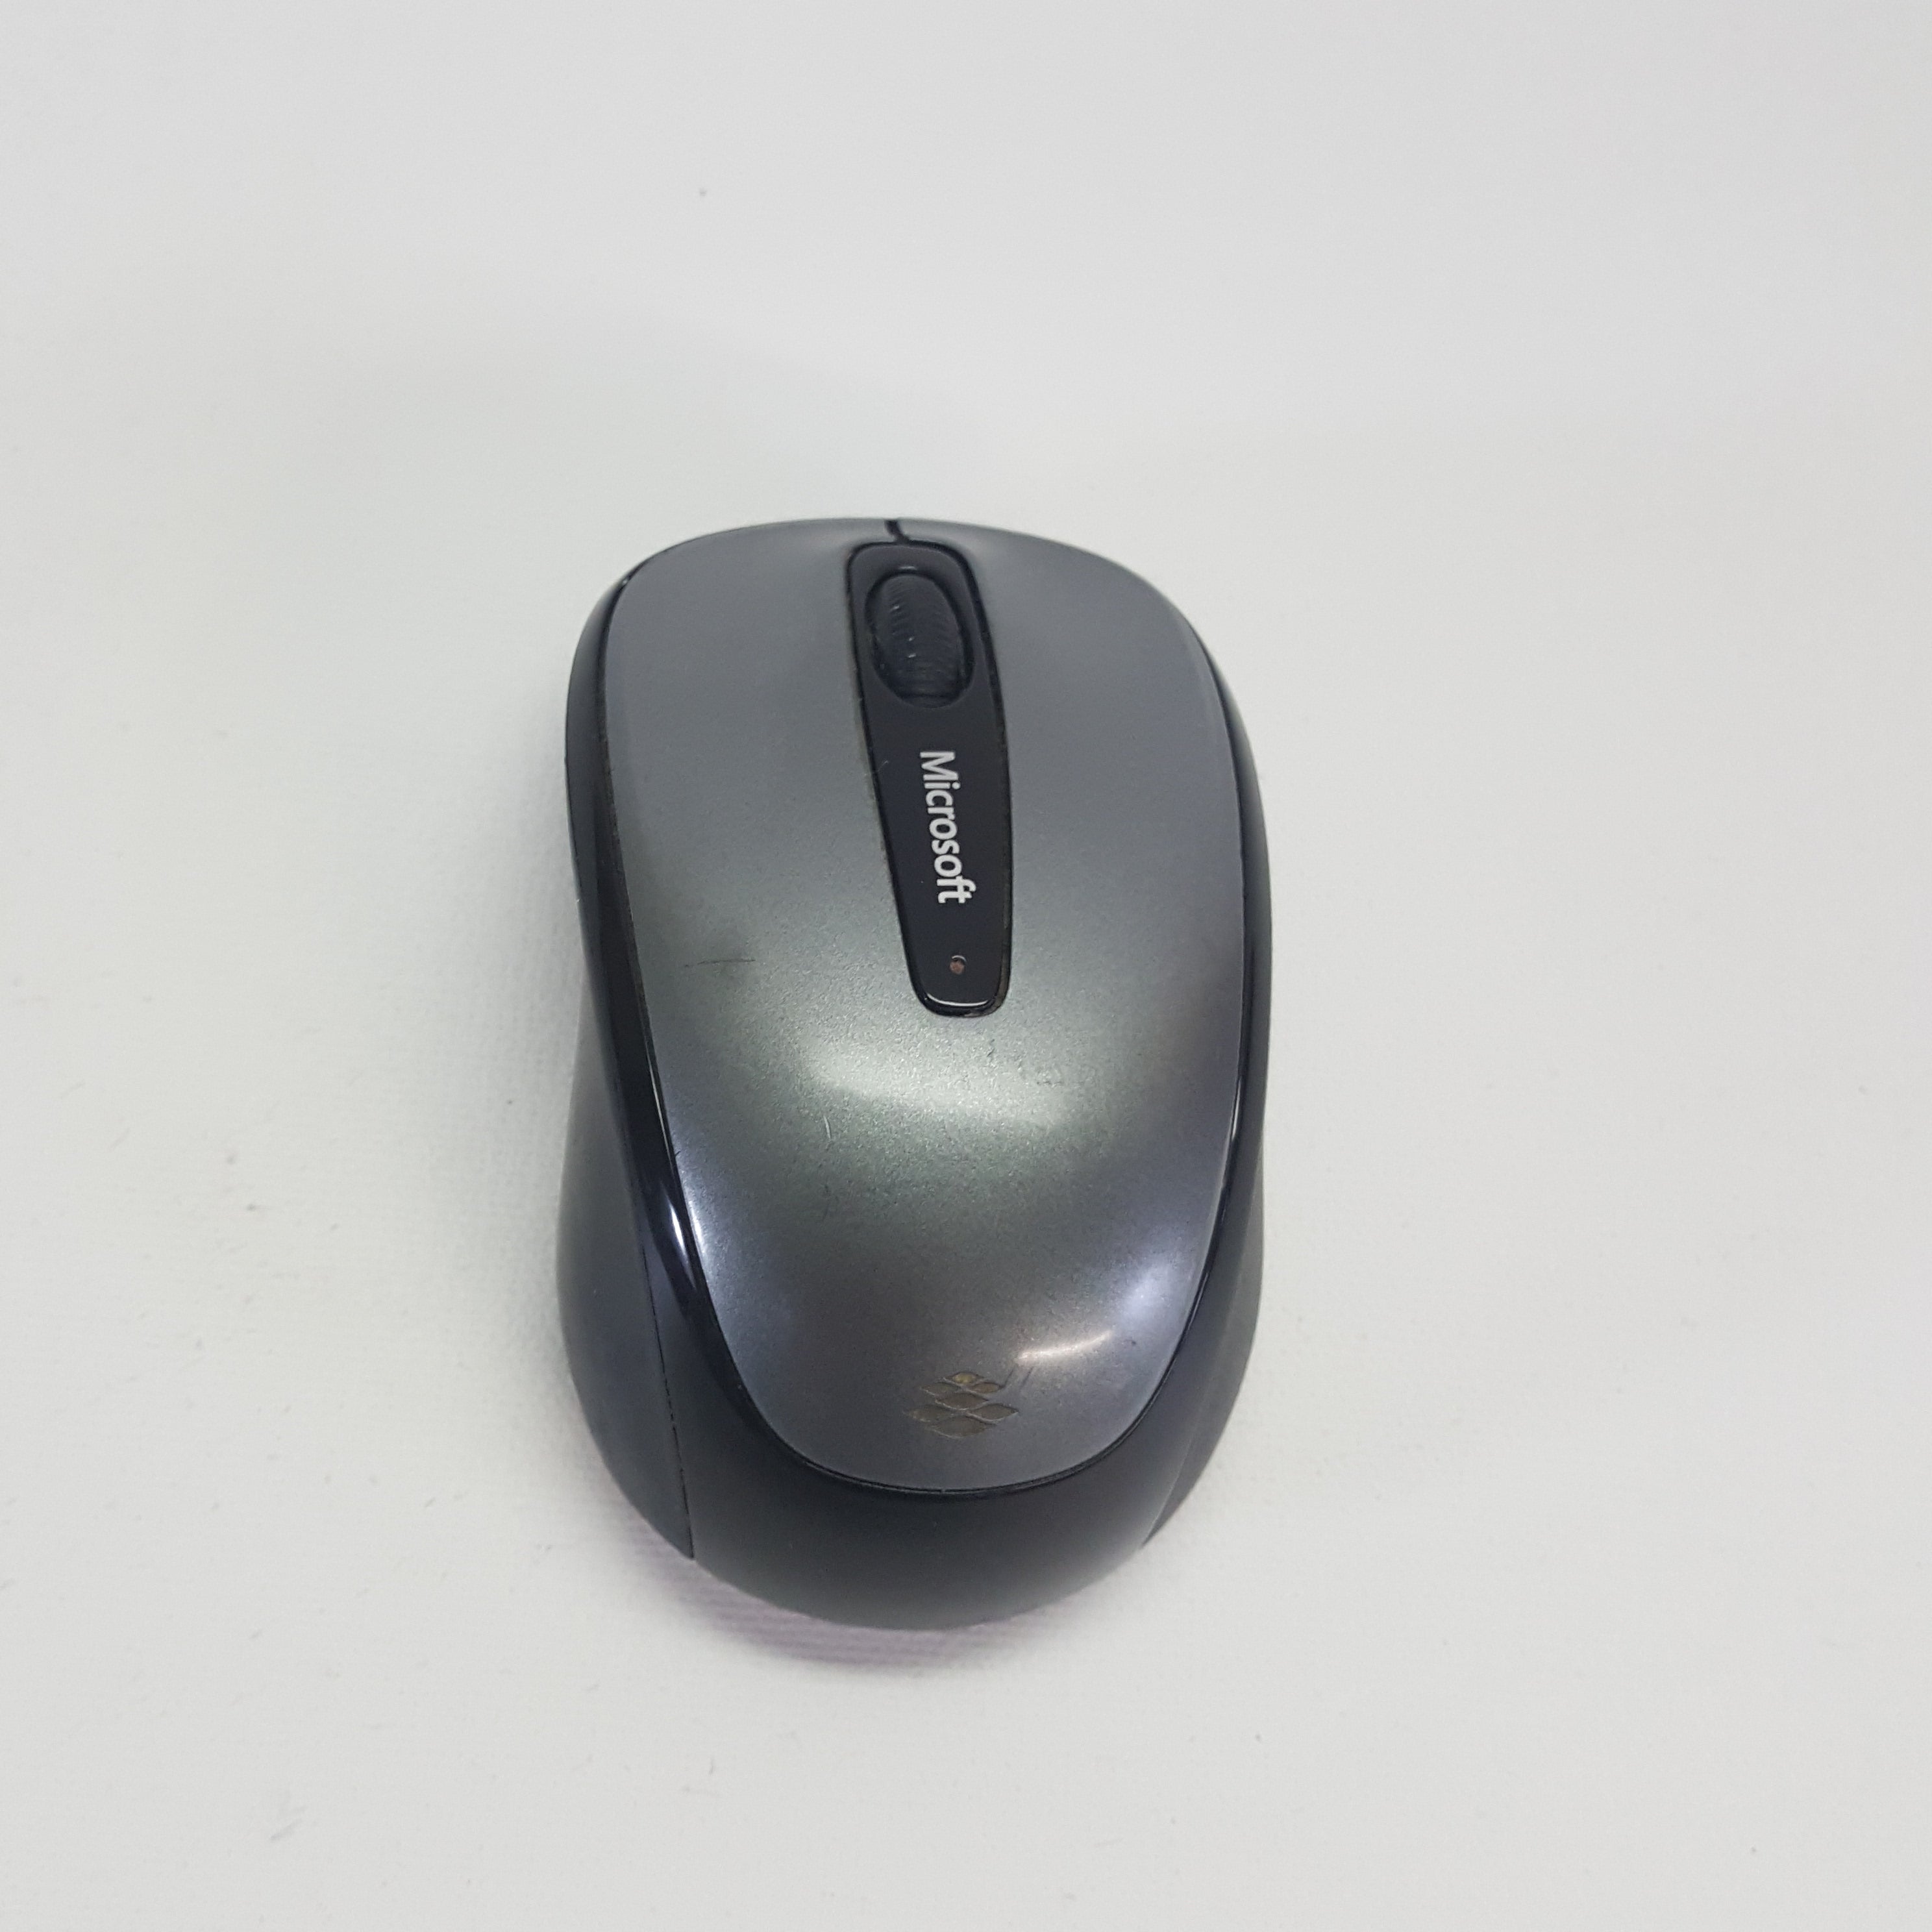 microsoft wireless mouse 3500 not responding